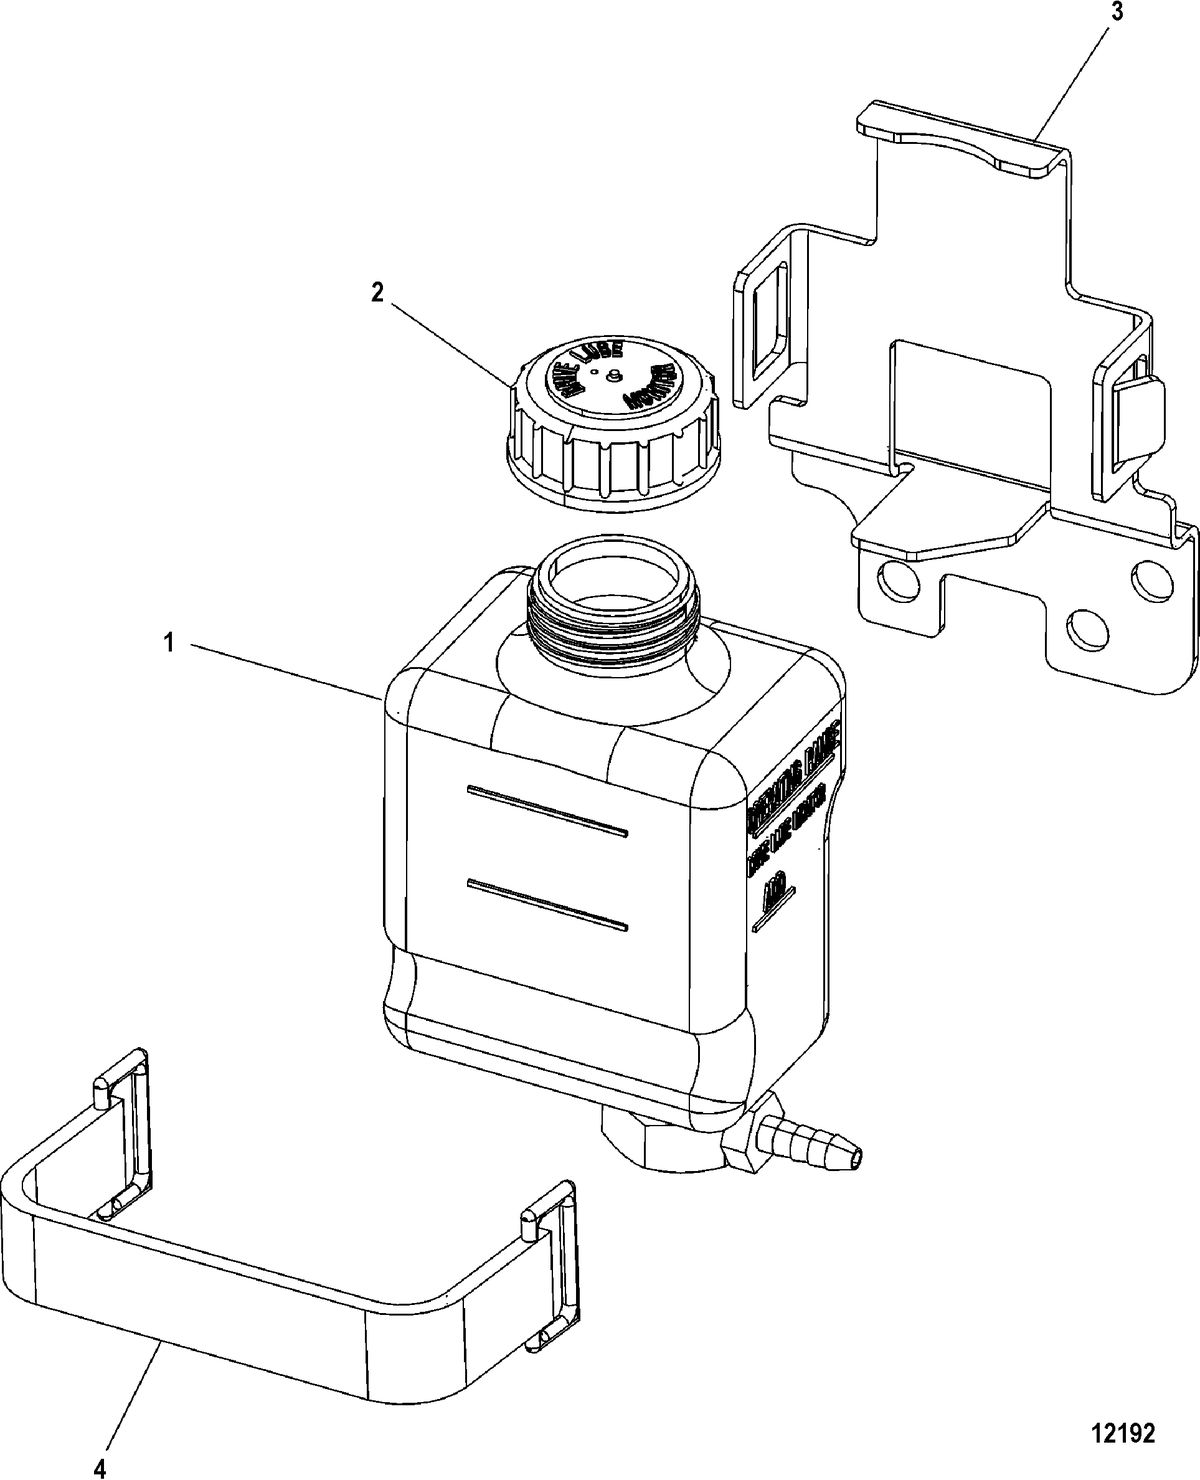 MERCRUISER CUMMINS/MERCRUSER DIESEL 1.7L-120 Drive Lubricant Monitor